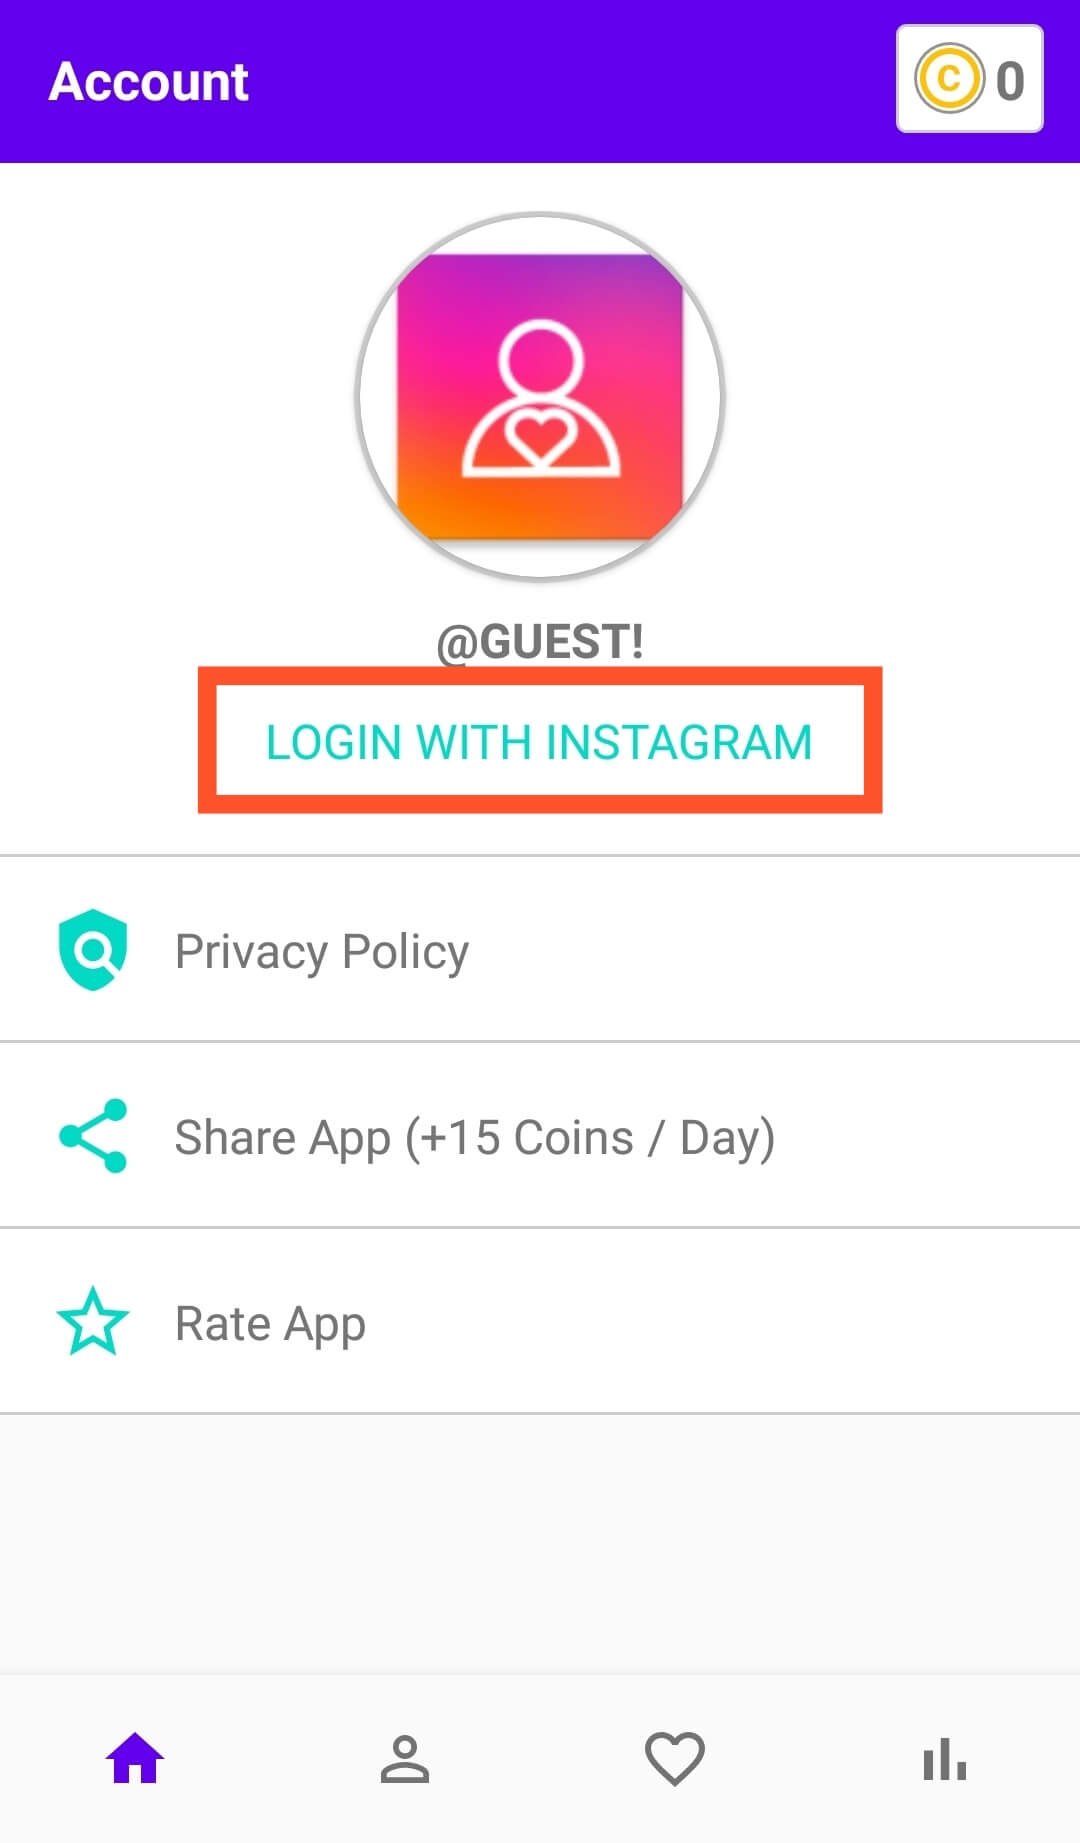 Login With Instagram Account In IgFans App